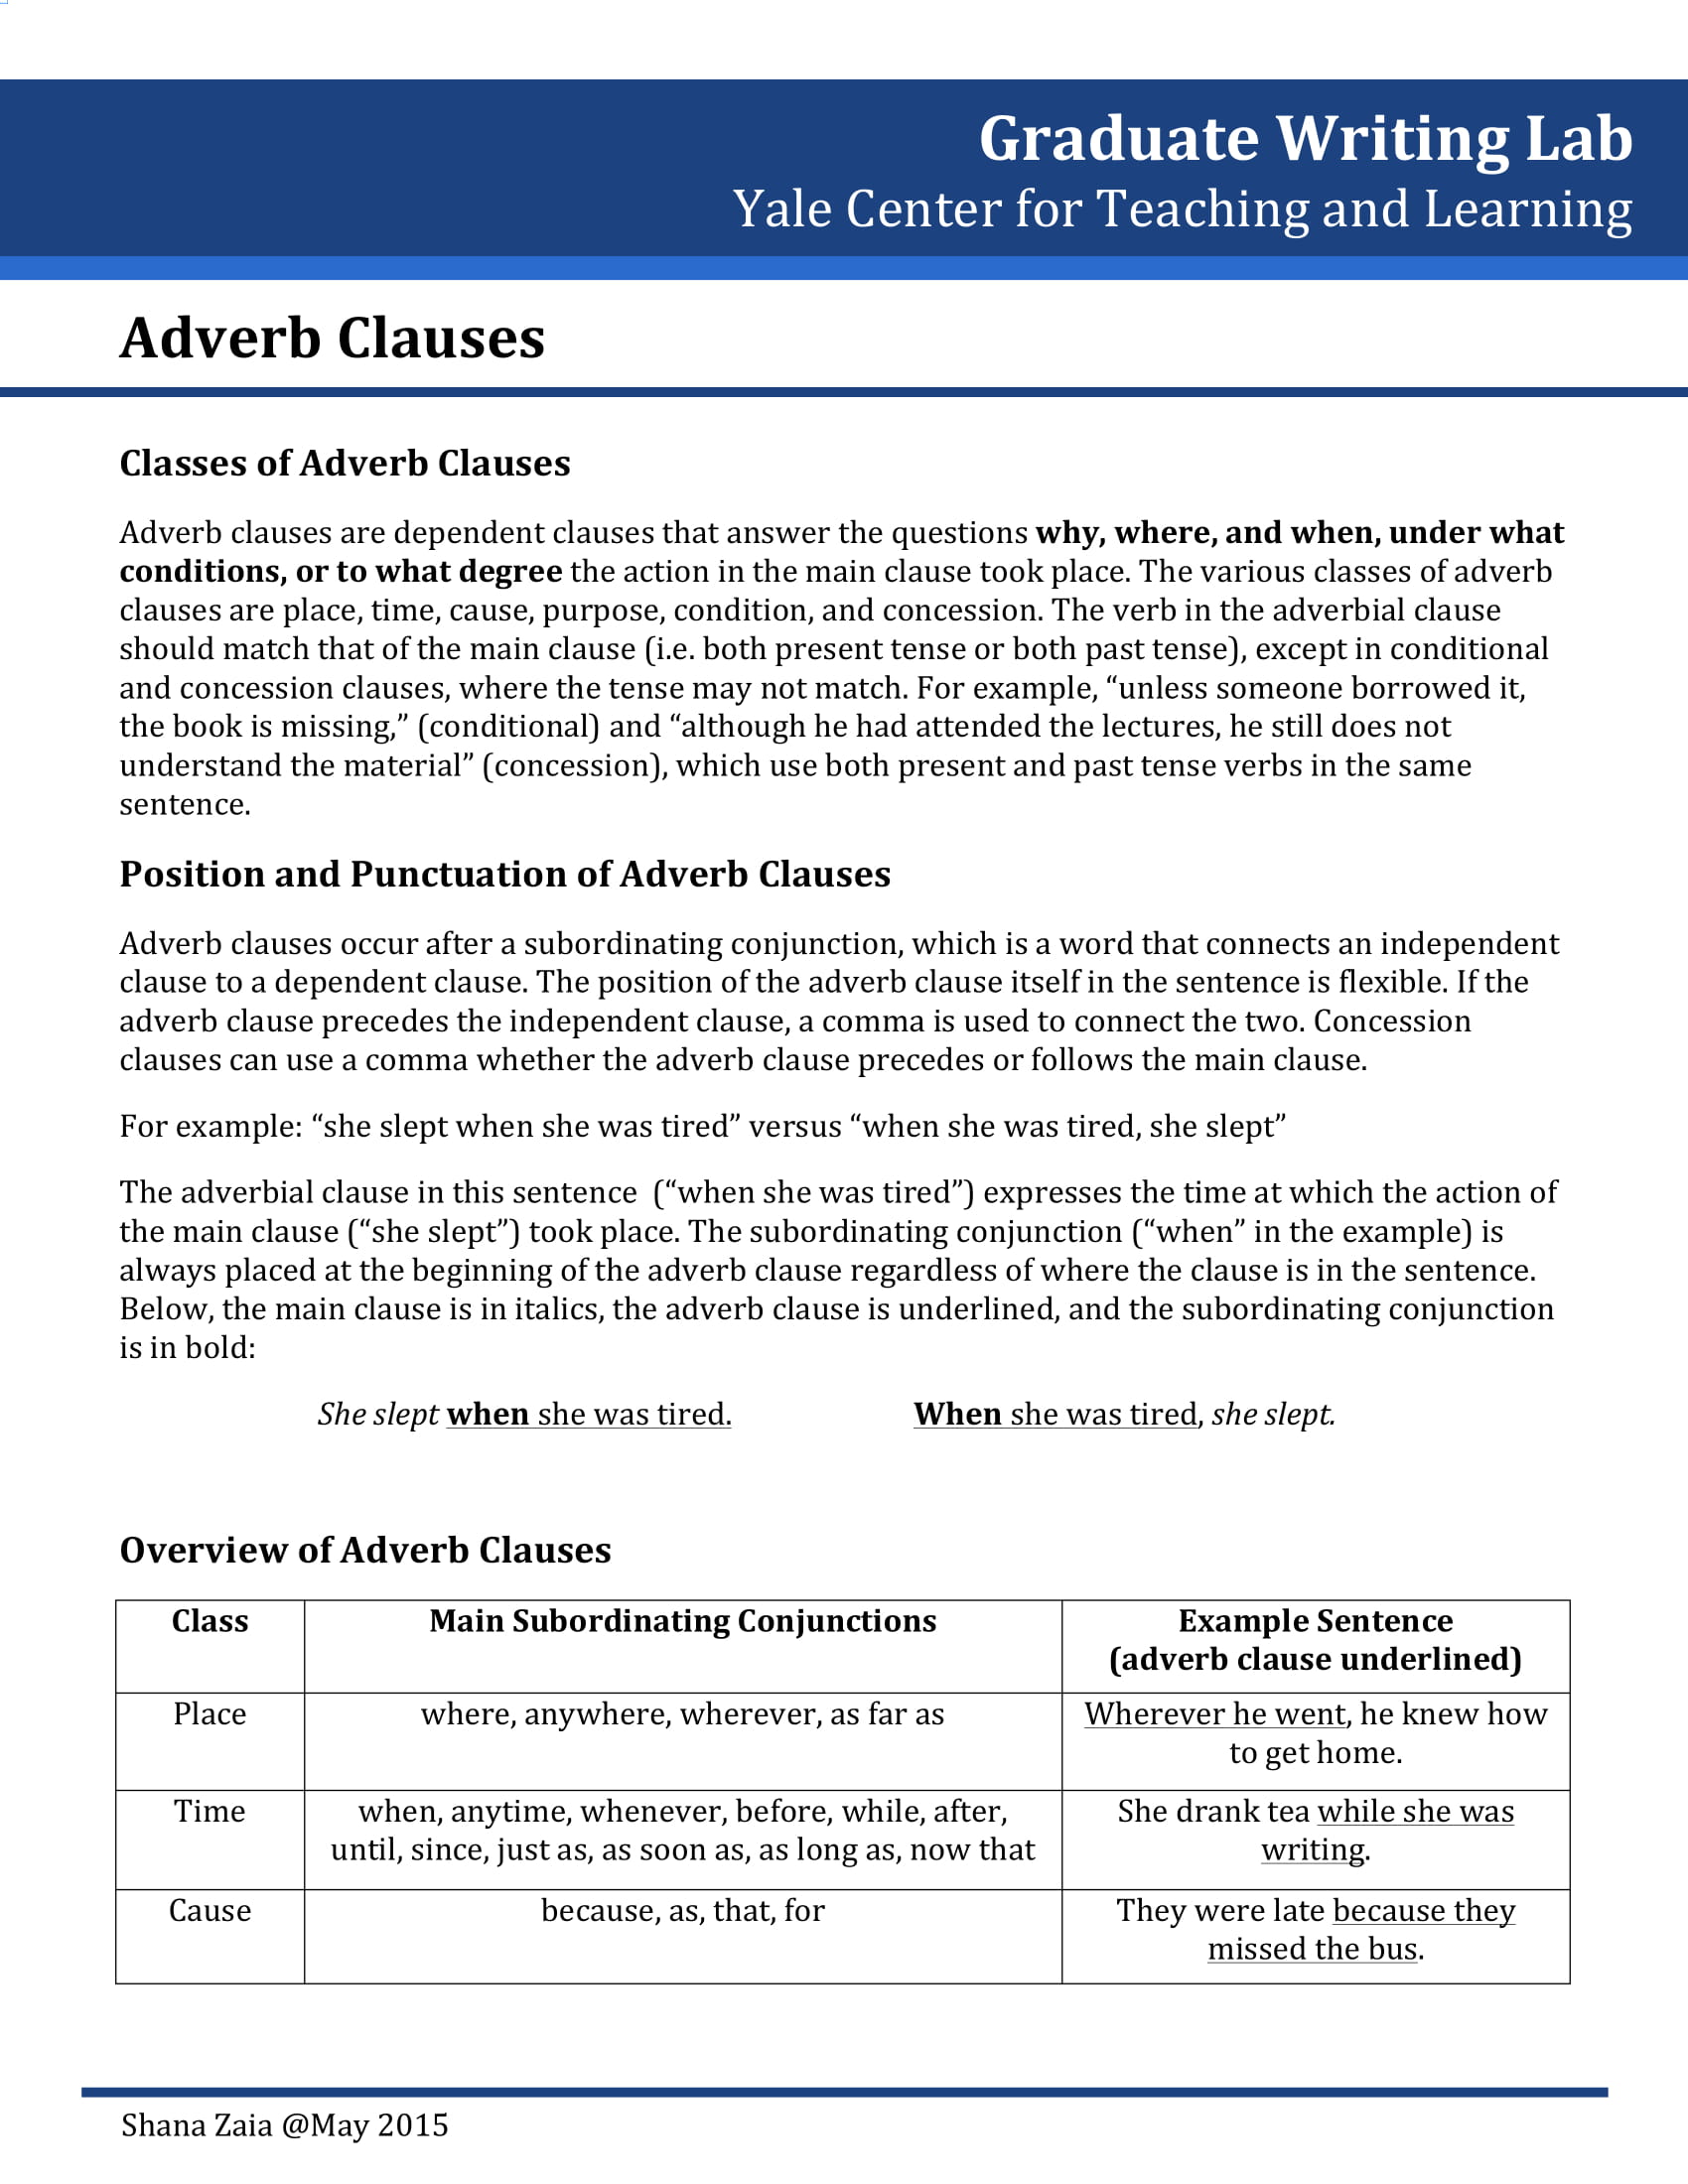 adverb examples in sentences pdf